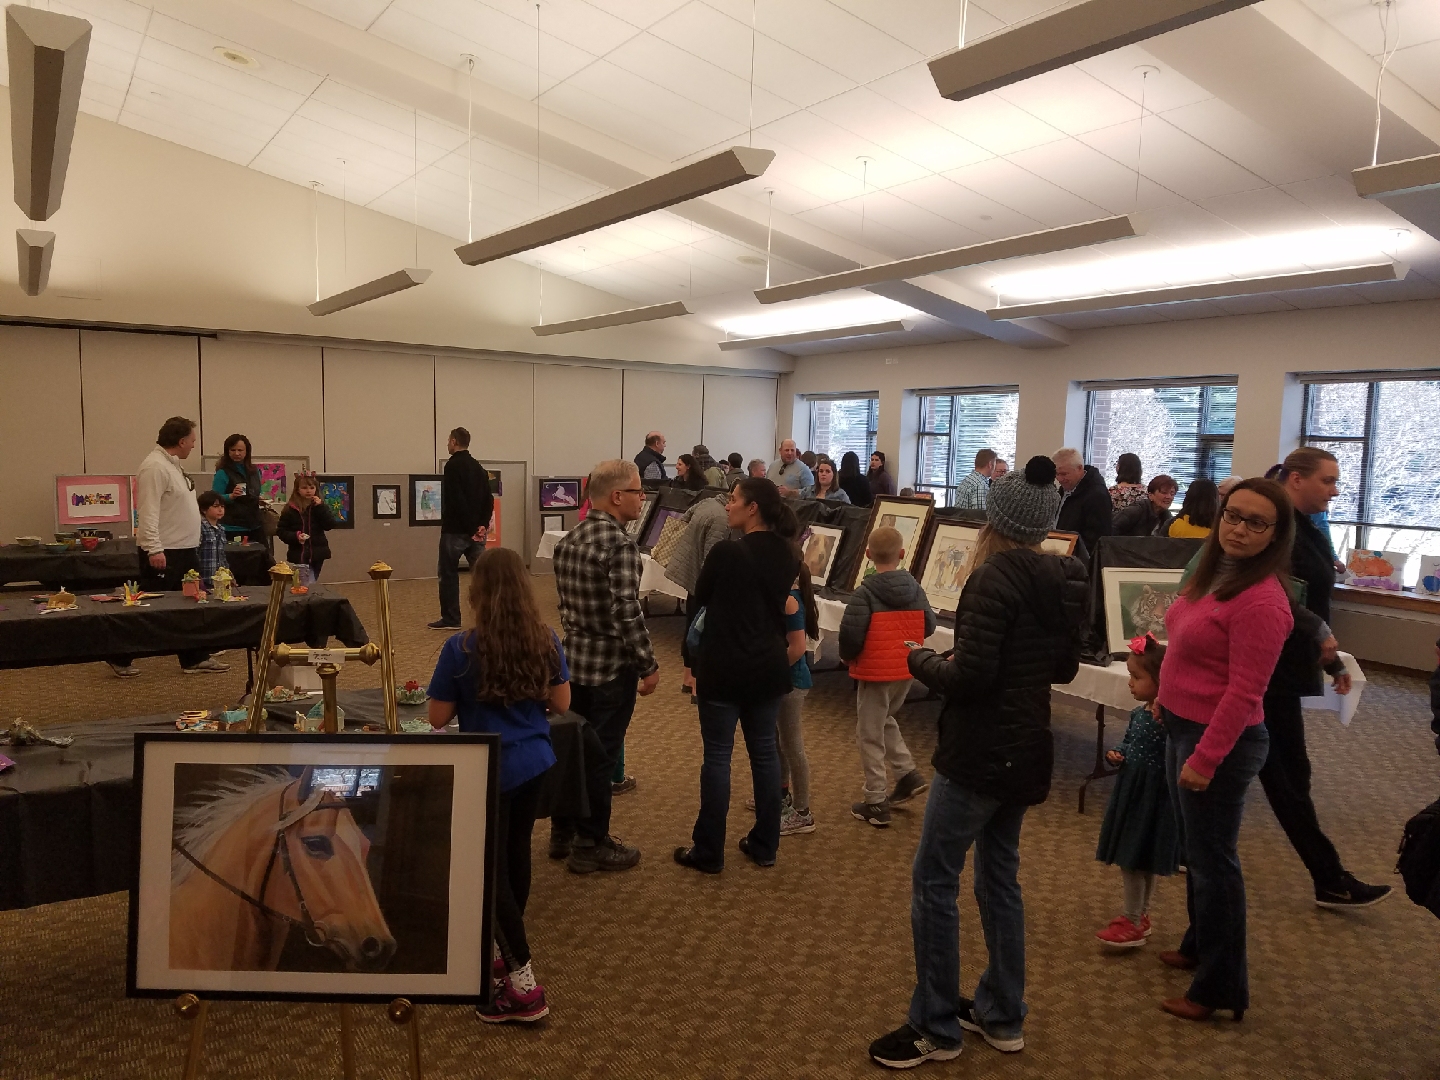 guests looking at artwork at the art show